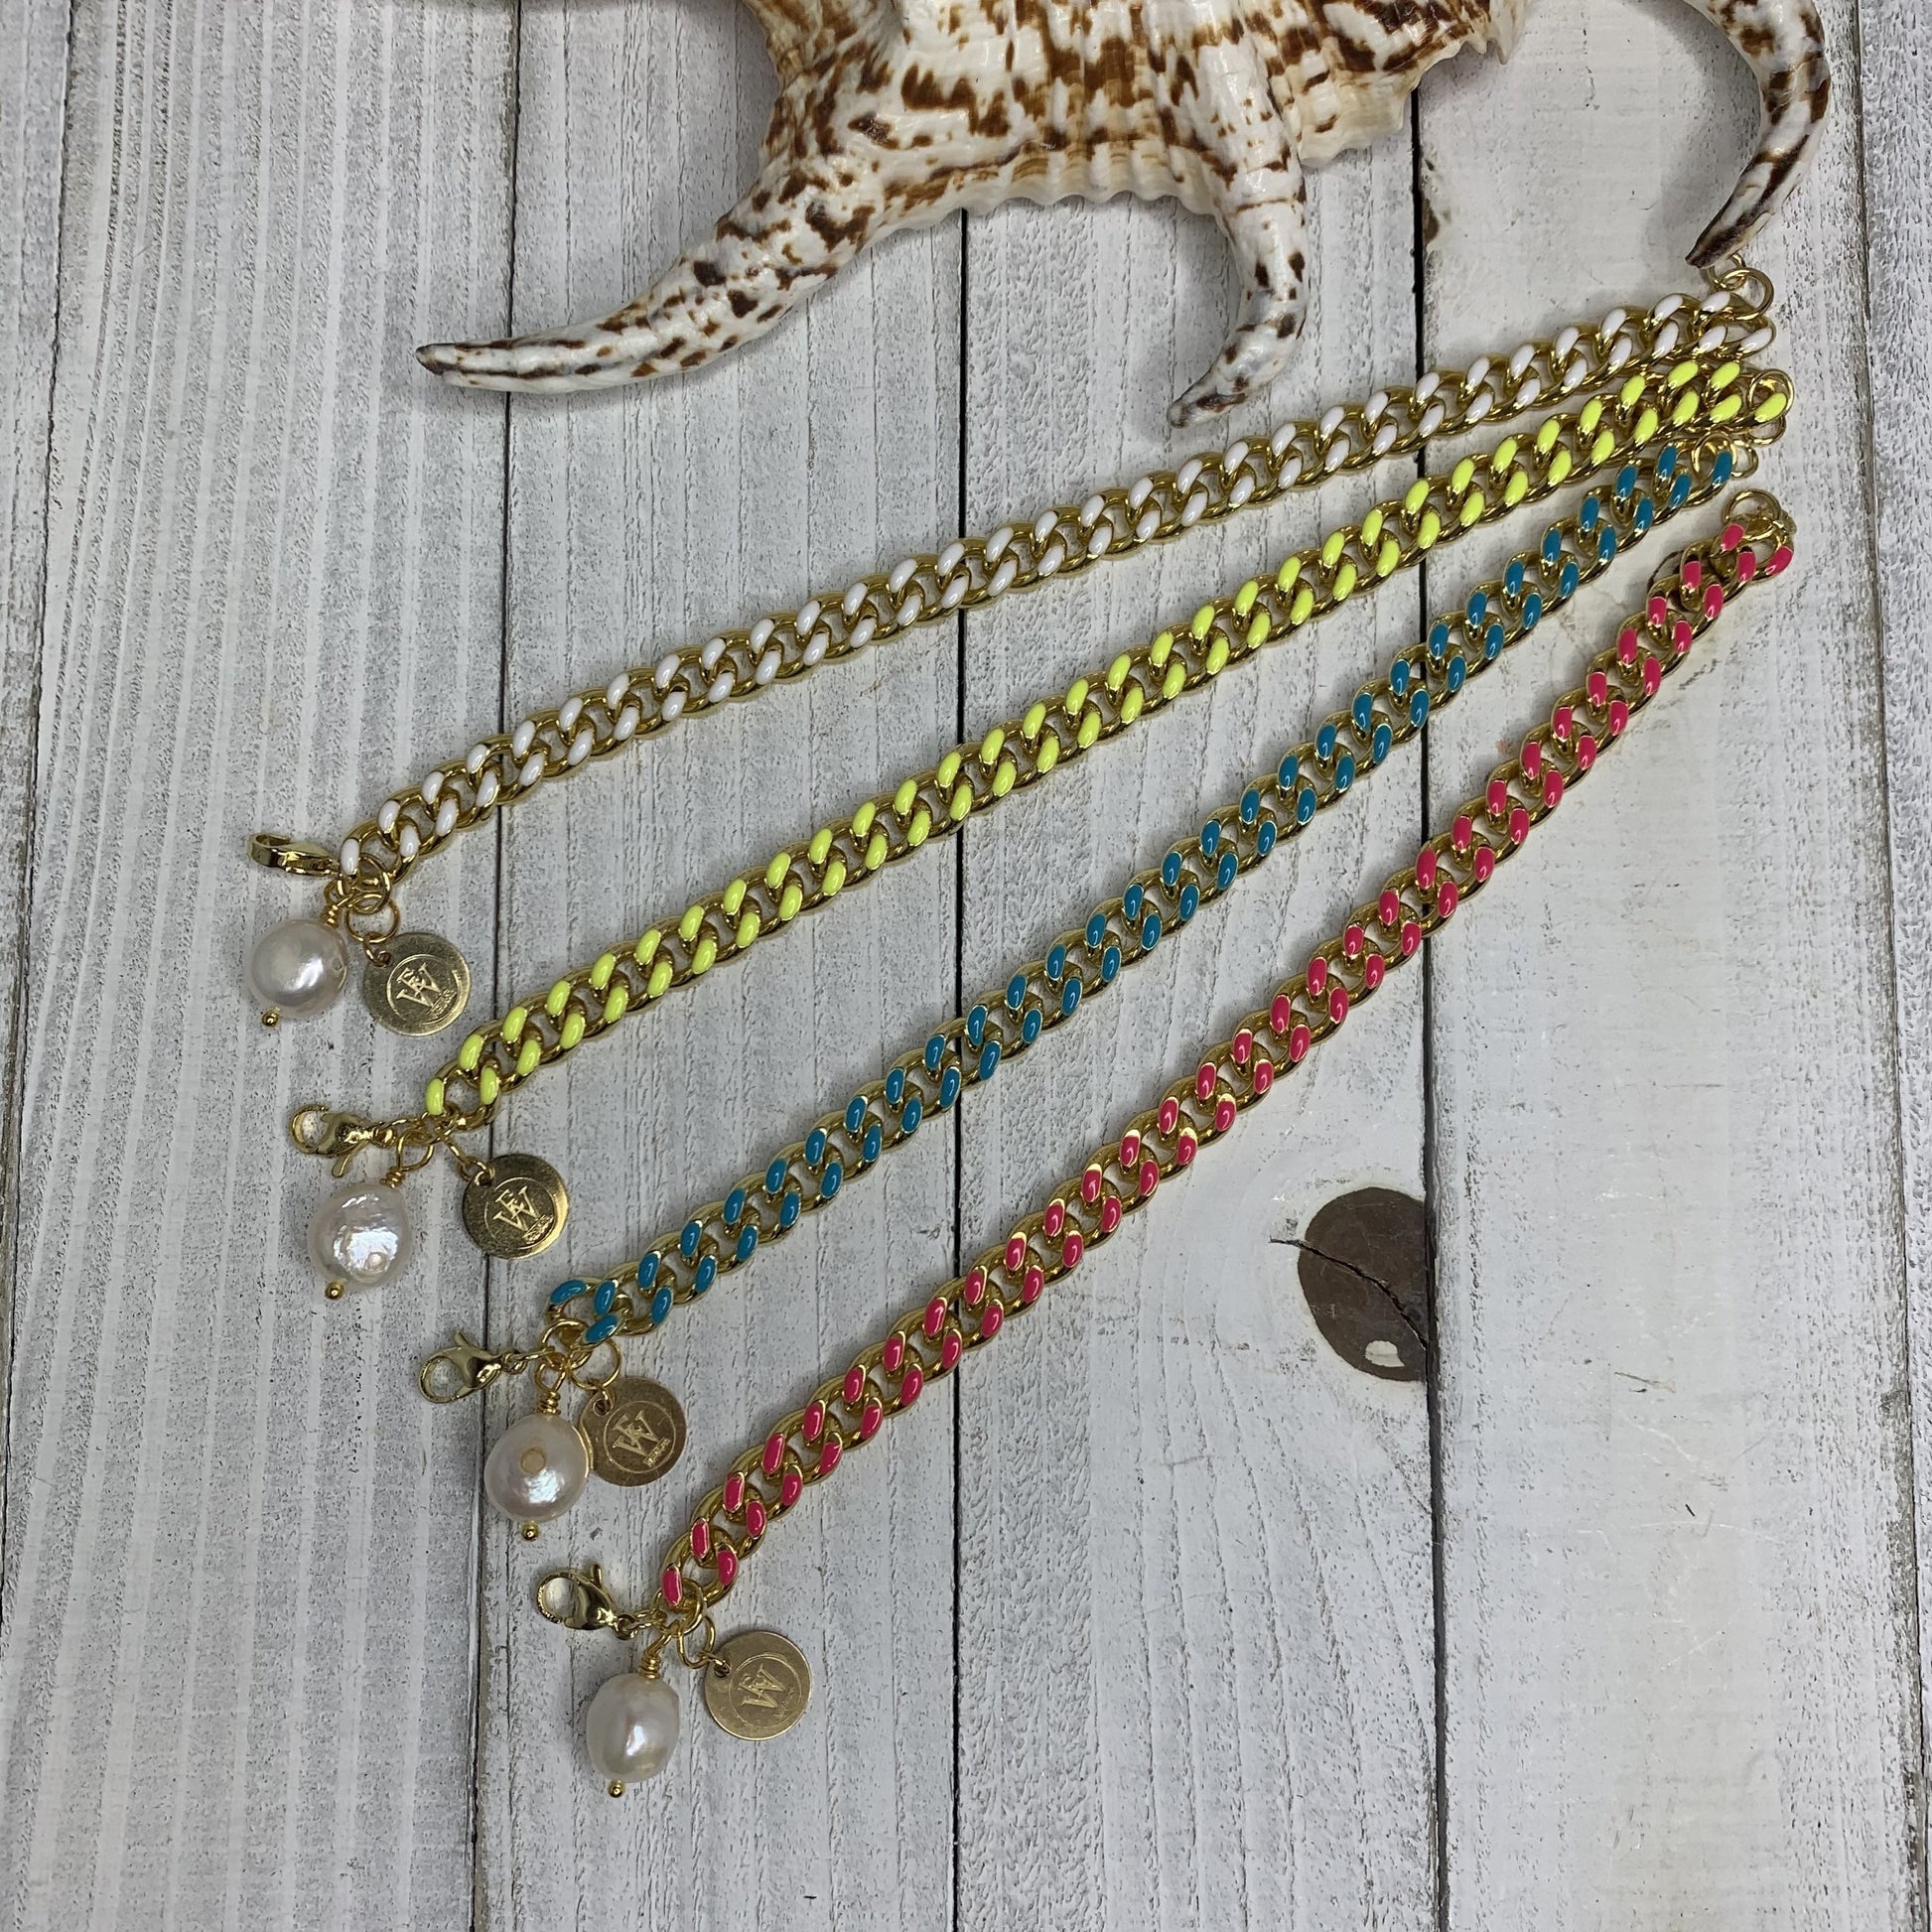  Chain Embellished with Neon Enamel Bracelet